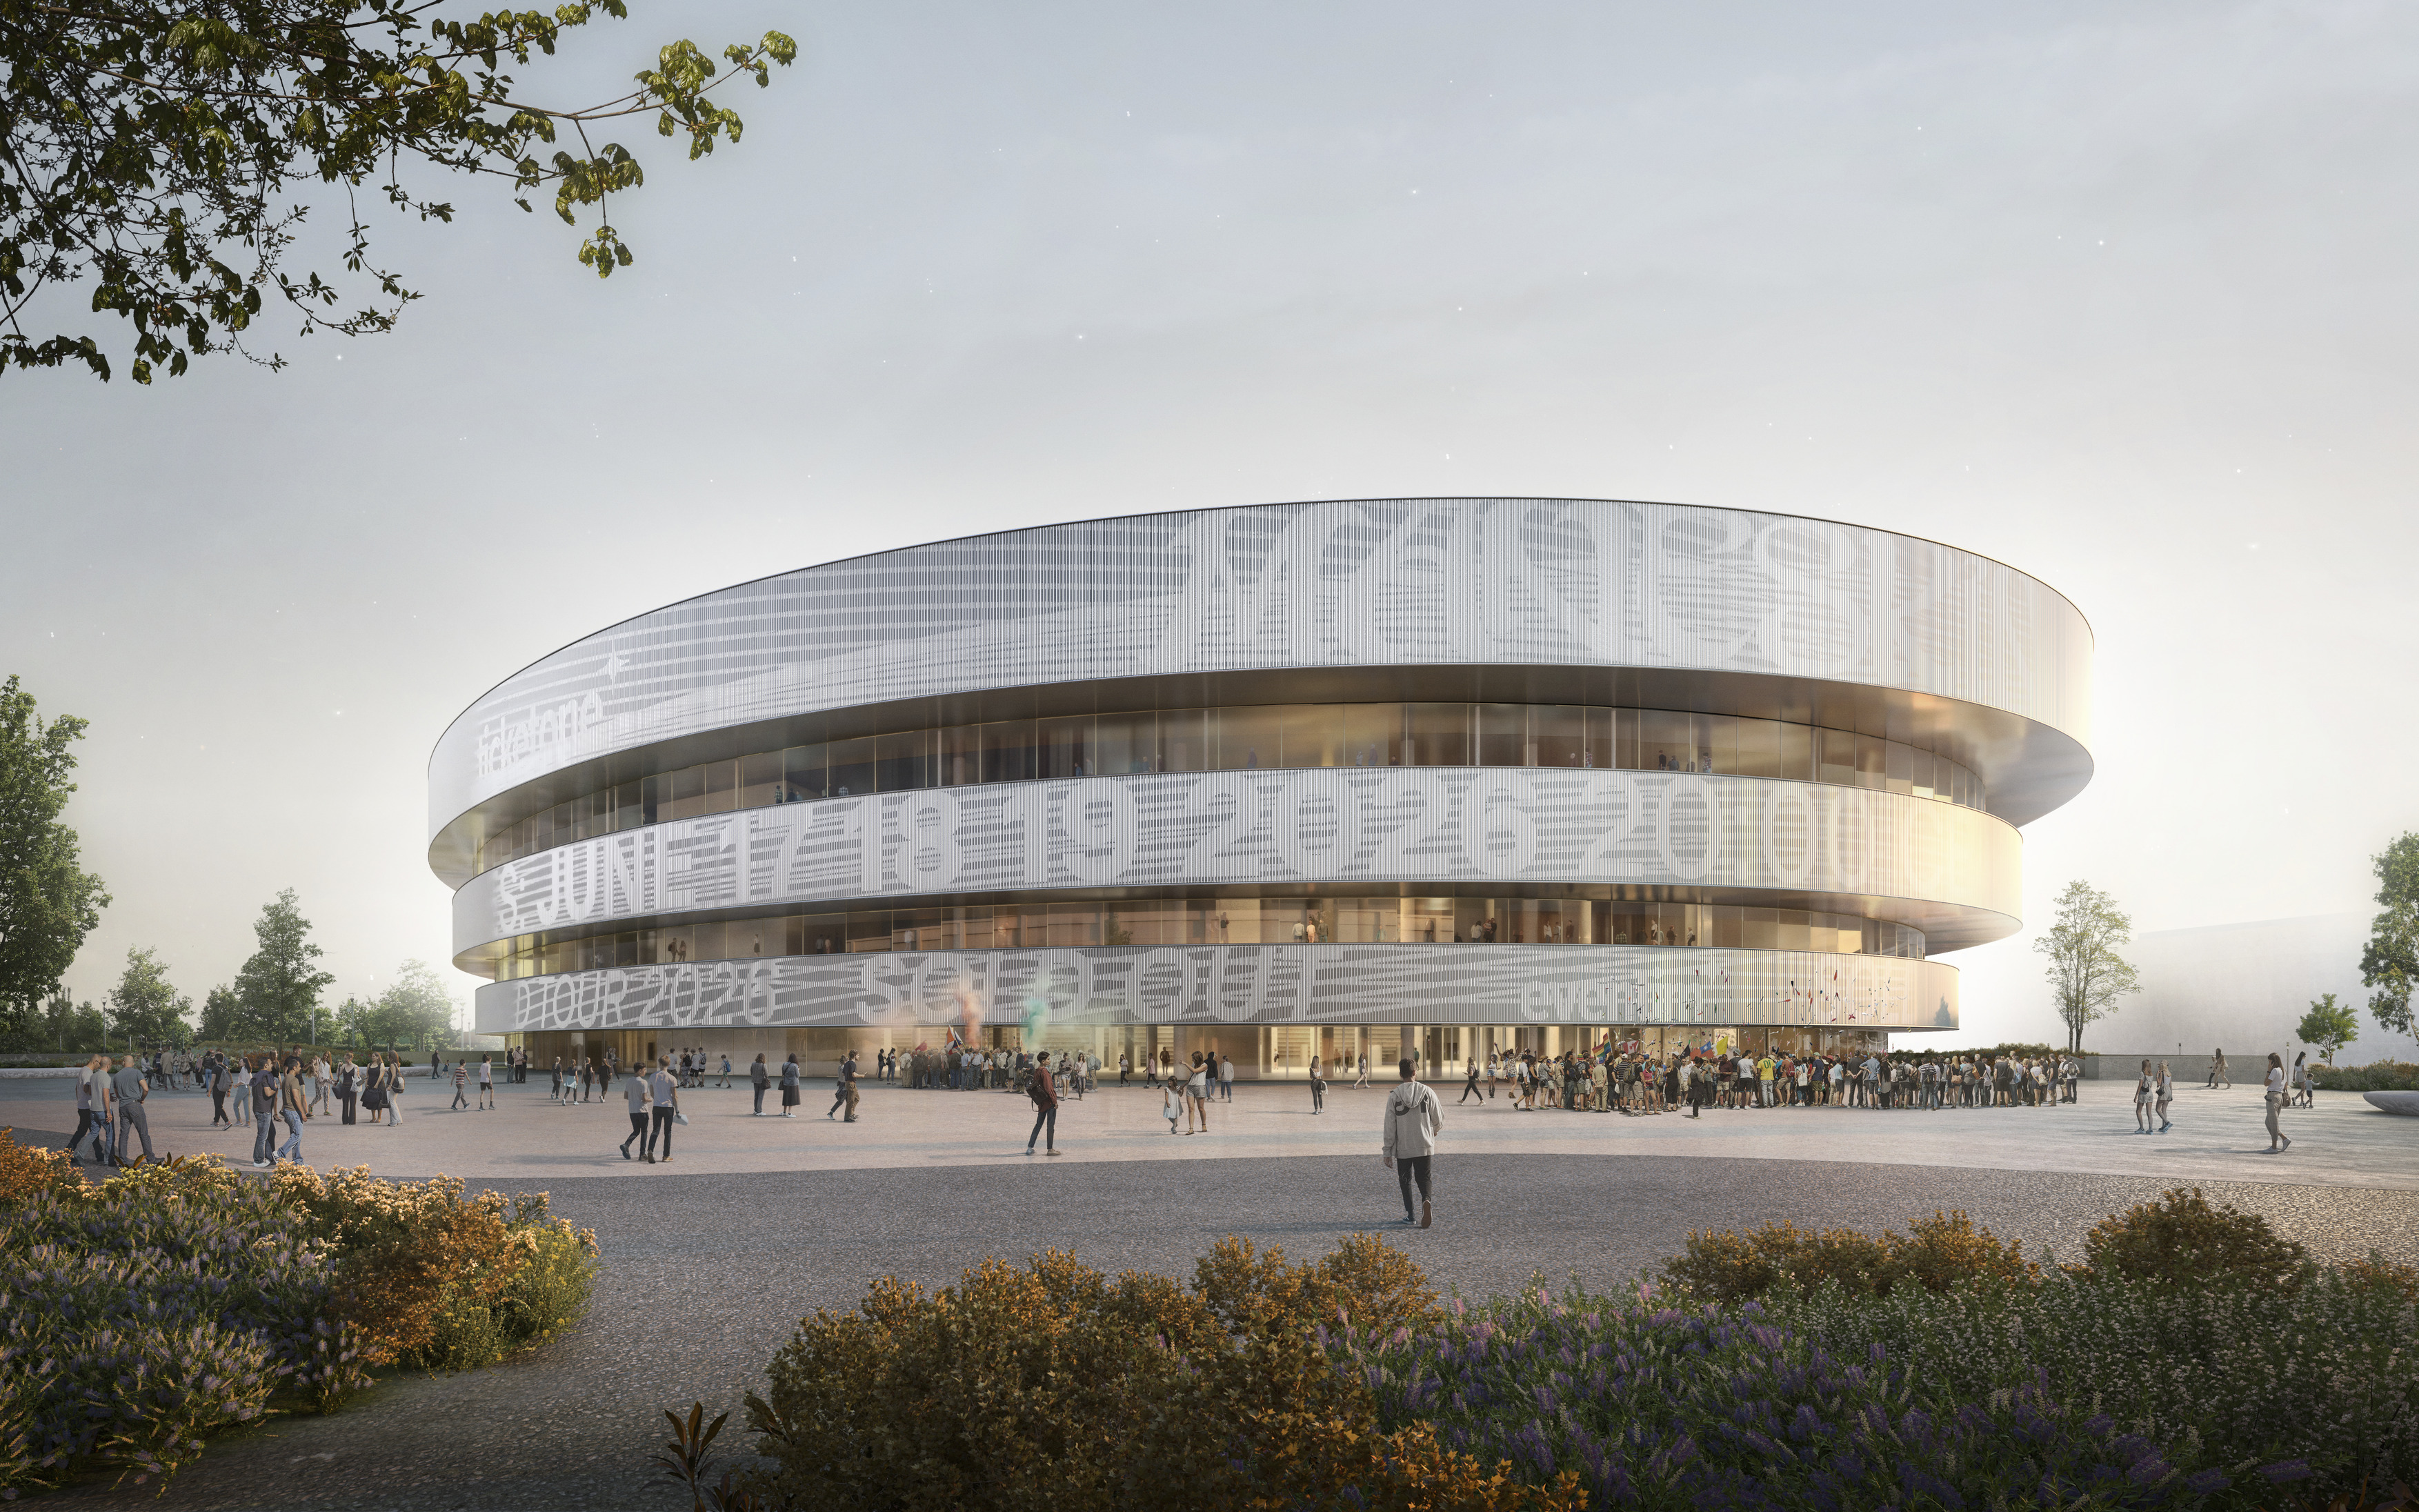 Santa Giulia Arena 的環形場館設計是以米蘭古圓形劇場為靈感。